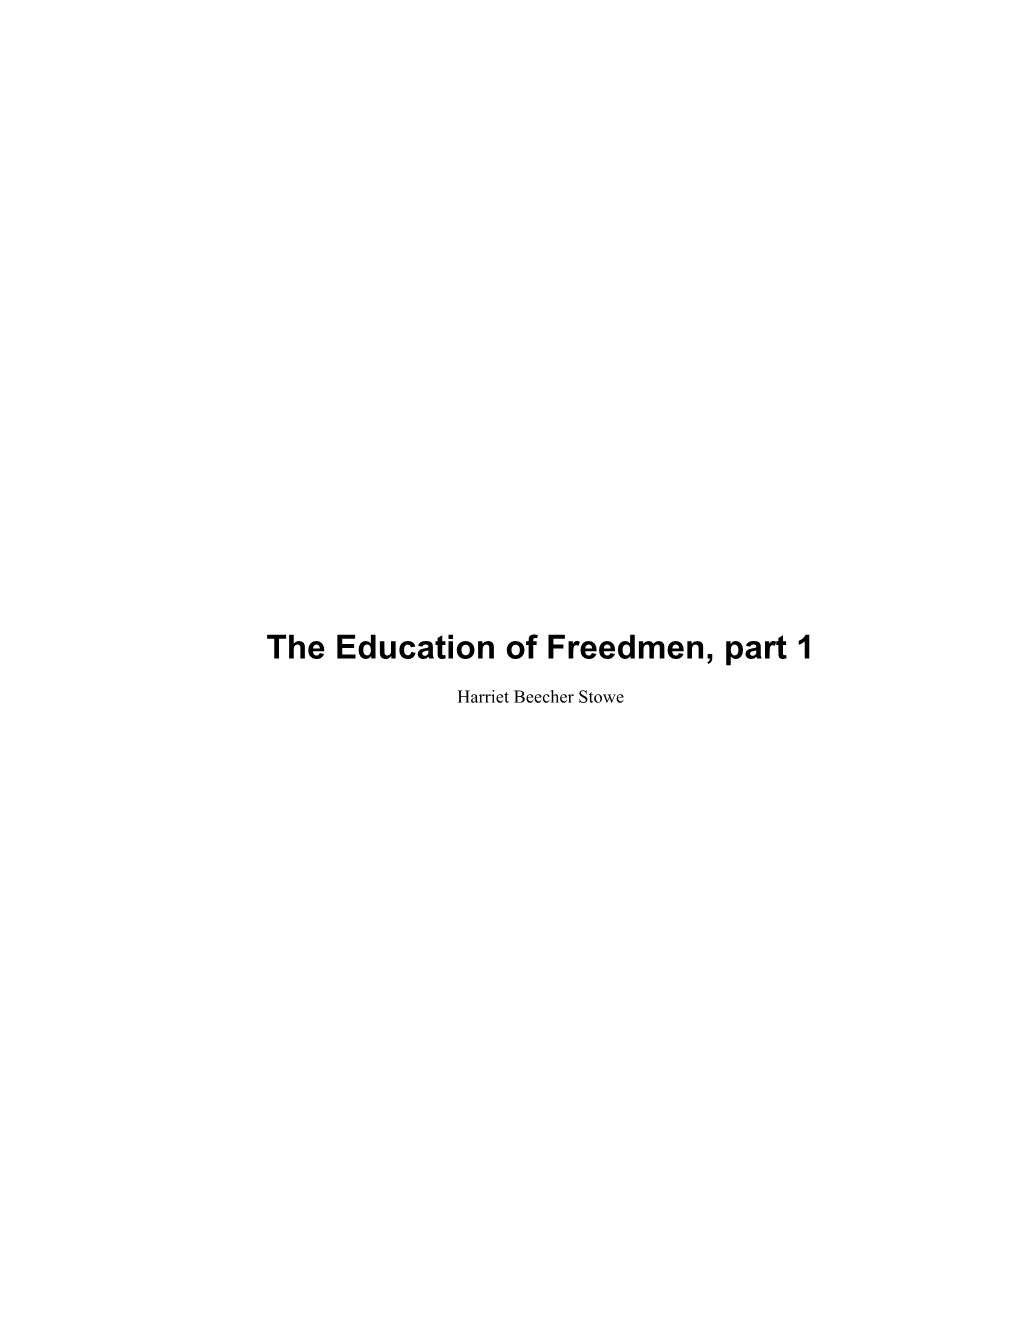 The Education of Freedmen, Part 1